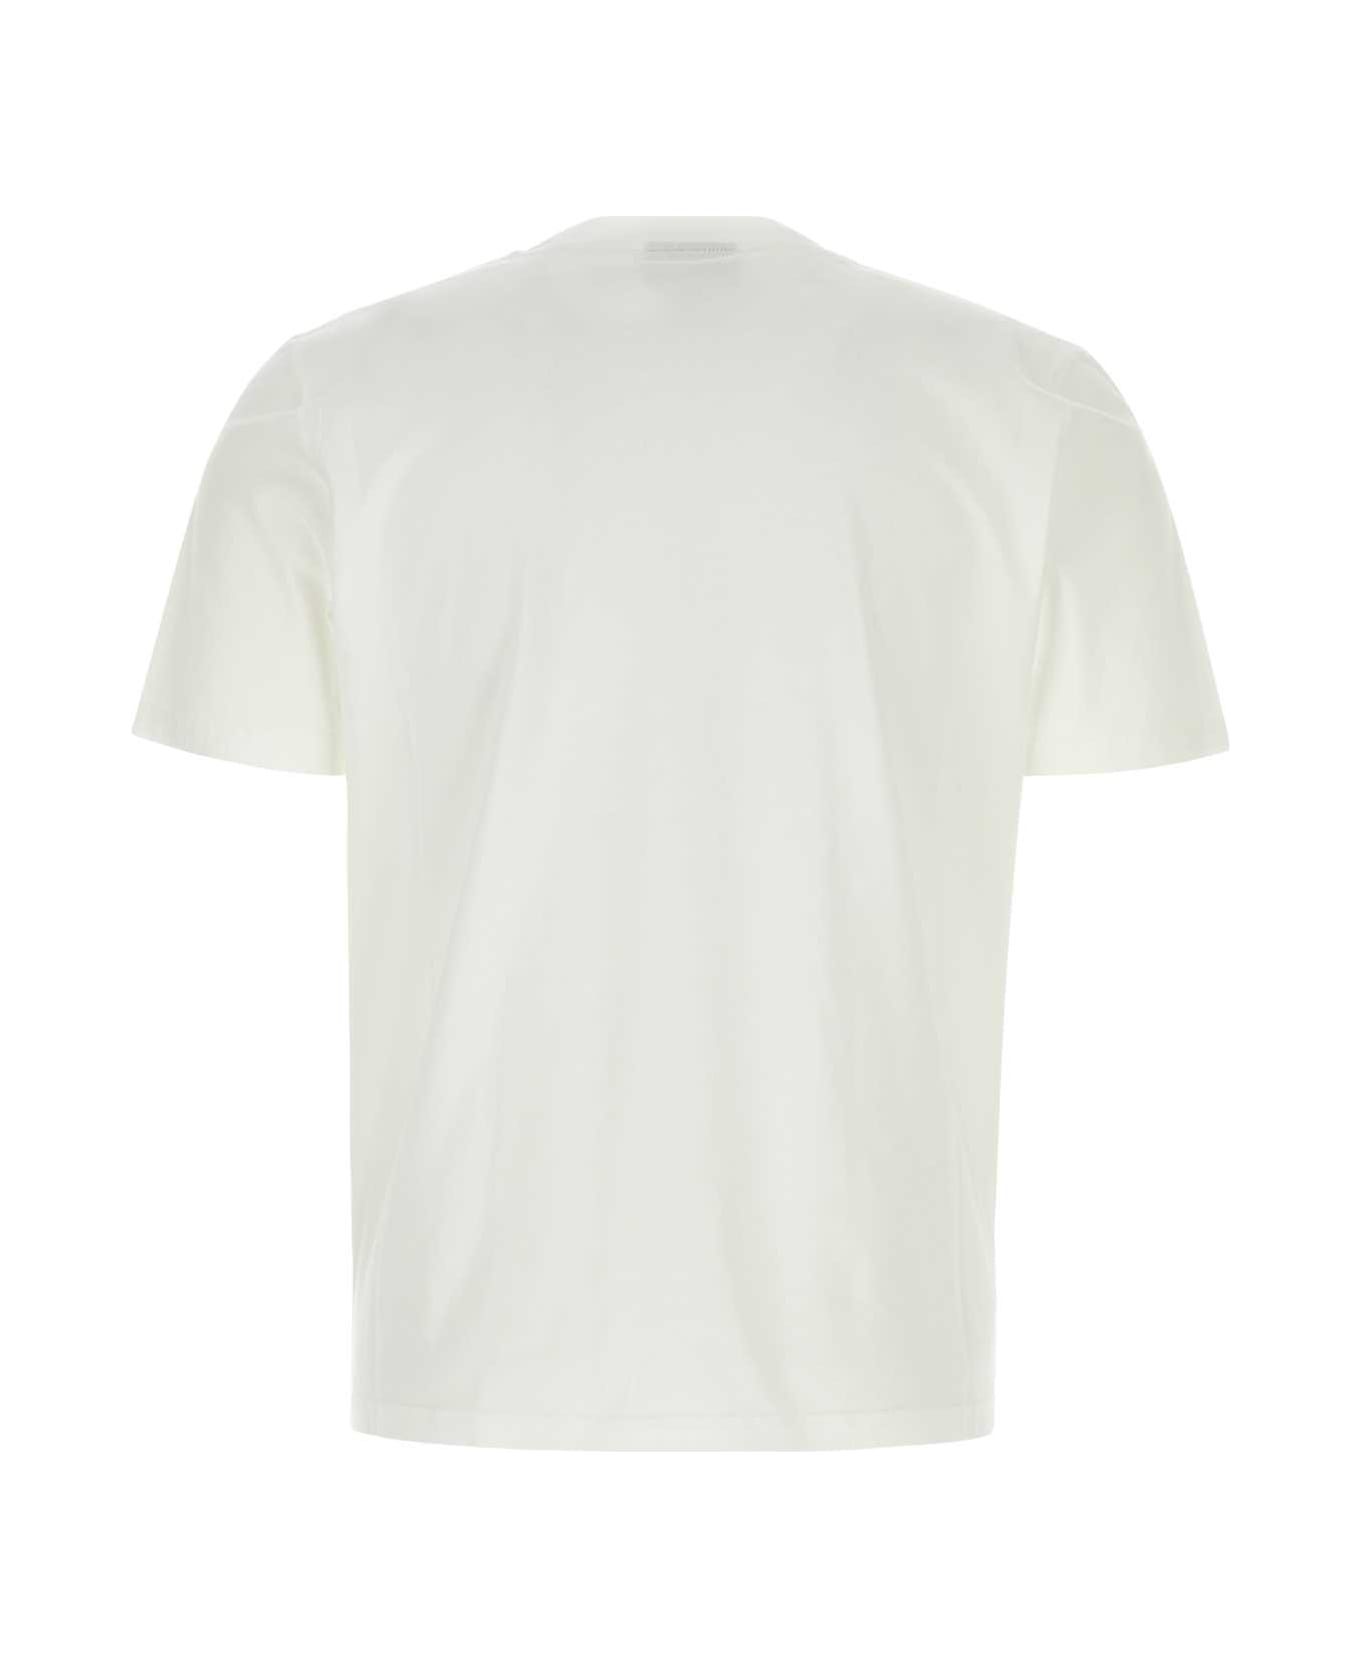 Botter White Cotton T-shirt - WHITECOL